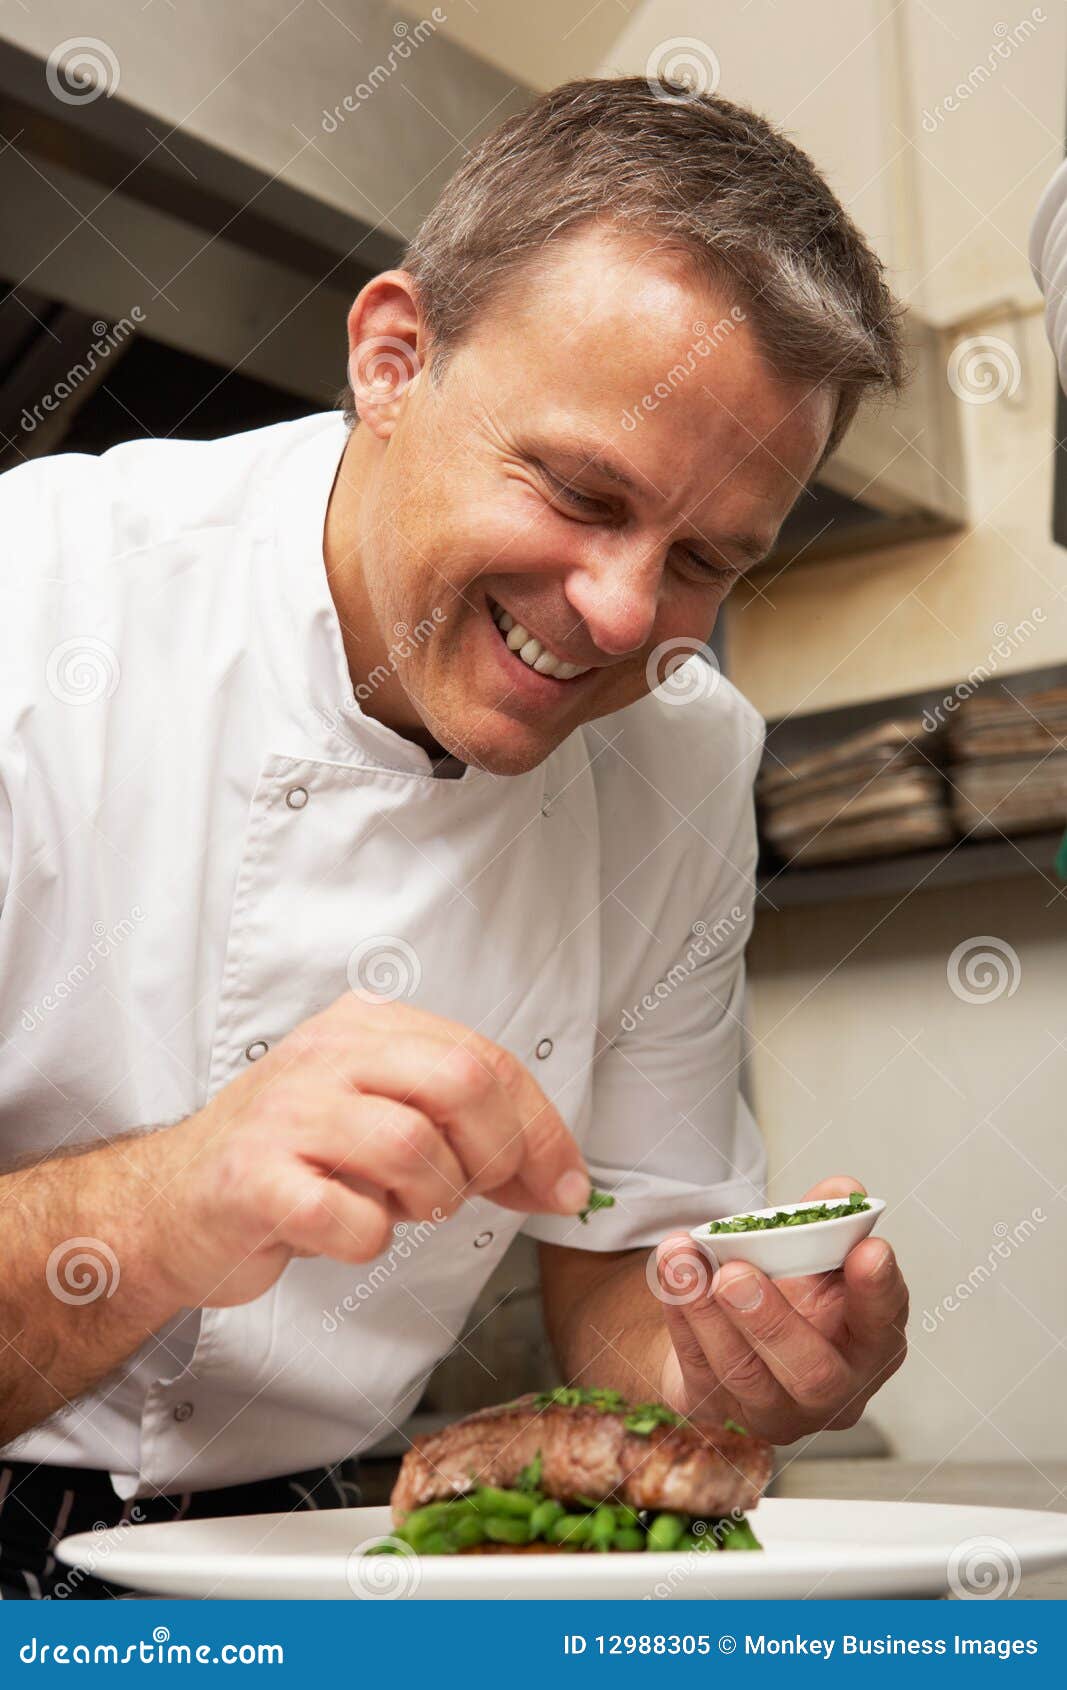 chef adding seasoning to dish in kitchen